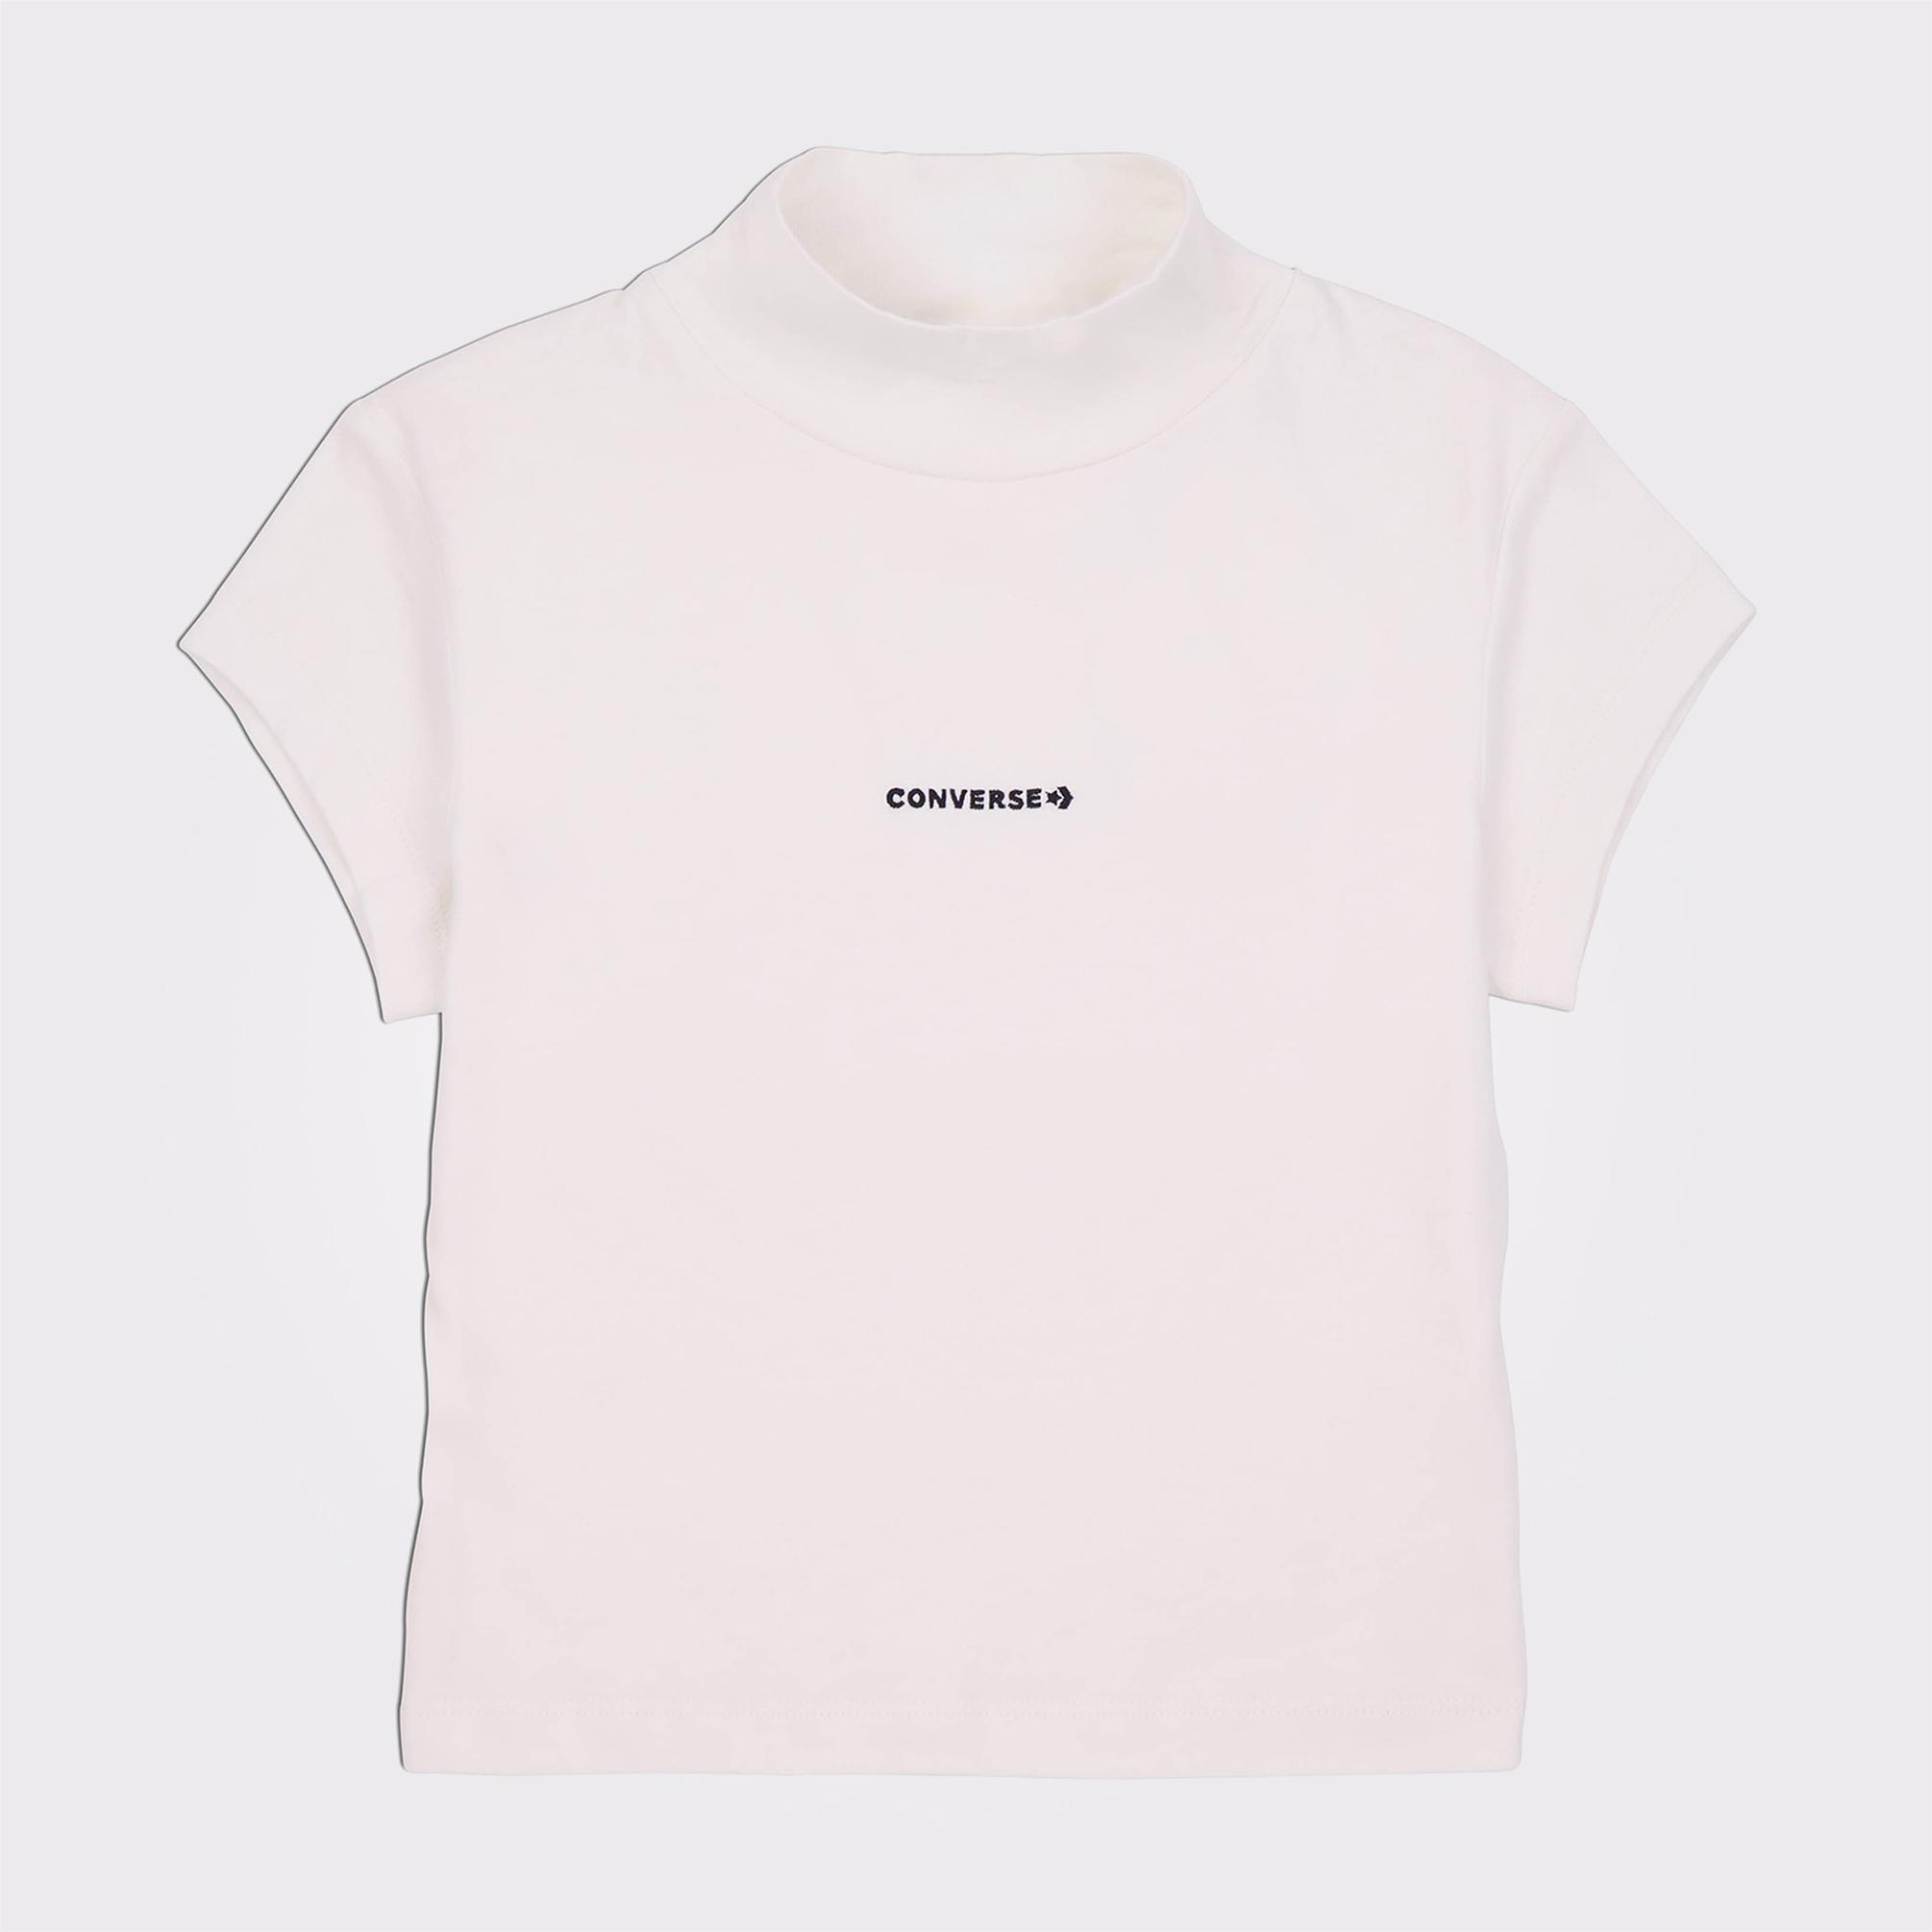  Converse Wordmark Short Sleeve Top Kadın Krem T-Shirt